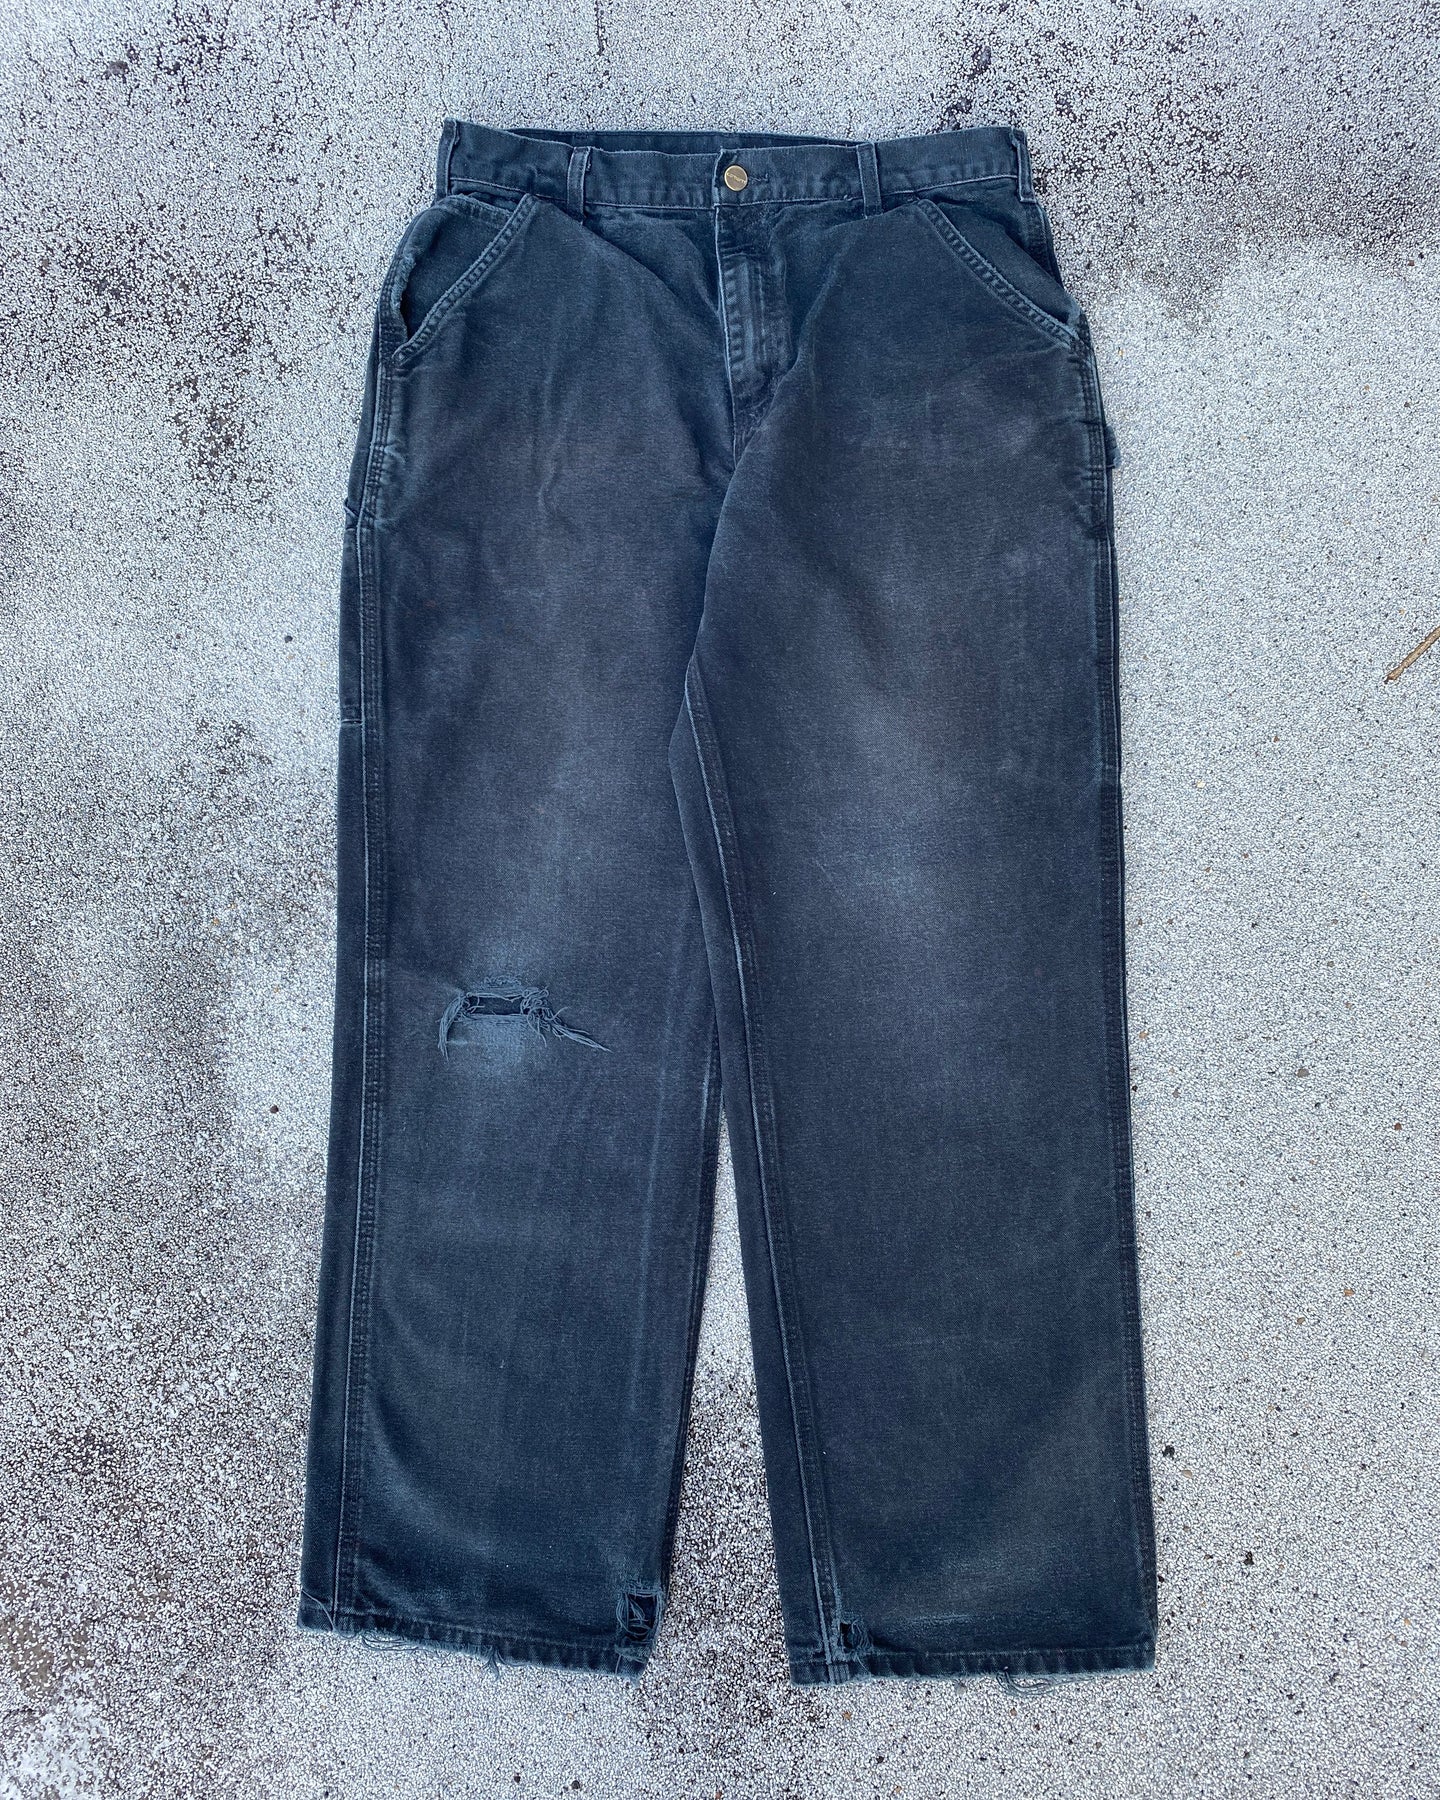 1990s Black Carhartt Distressed Carpenter Pants - Size 33 x 30